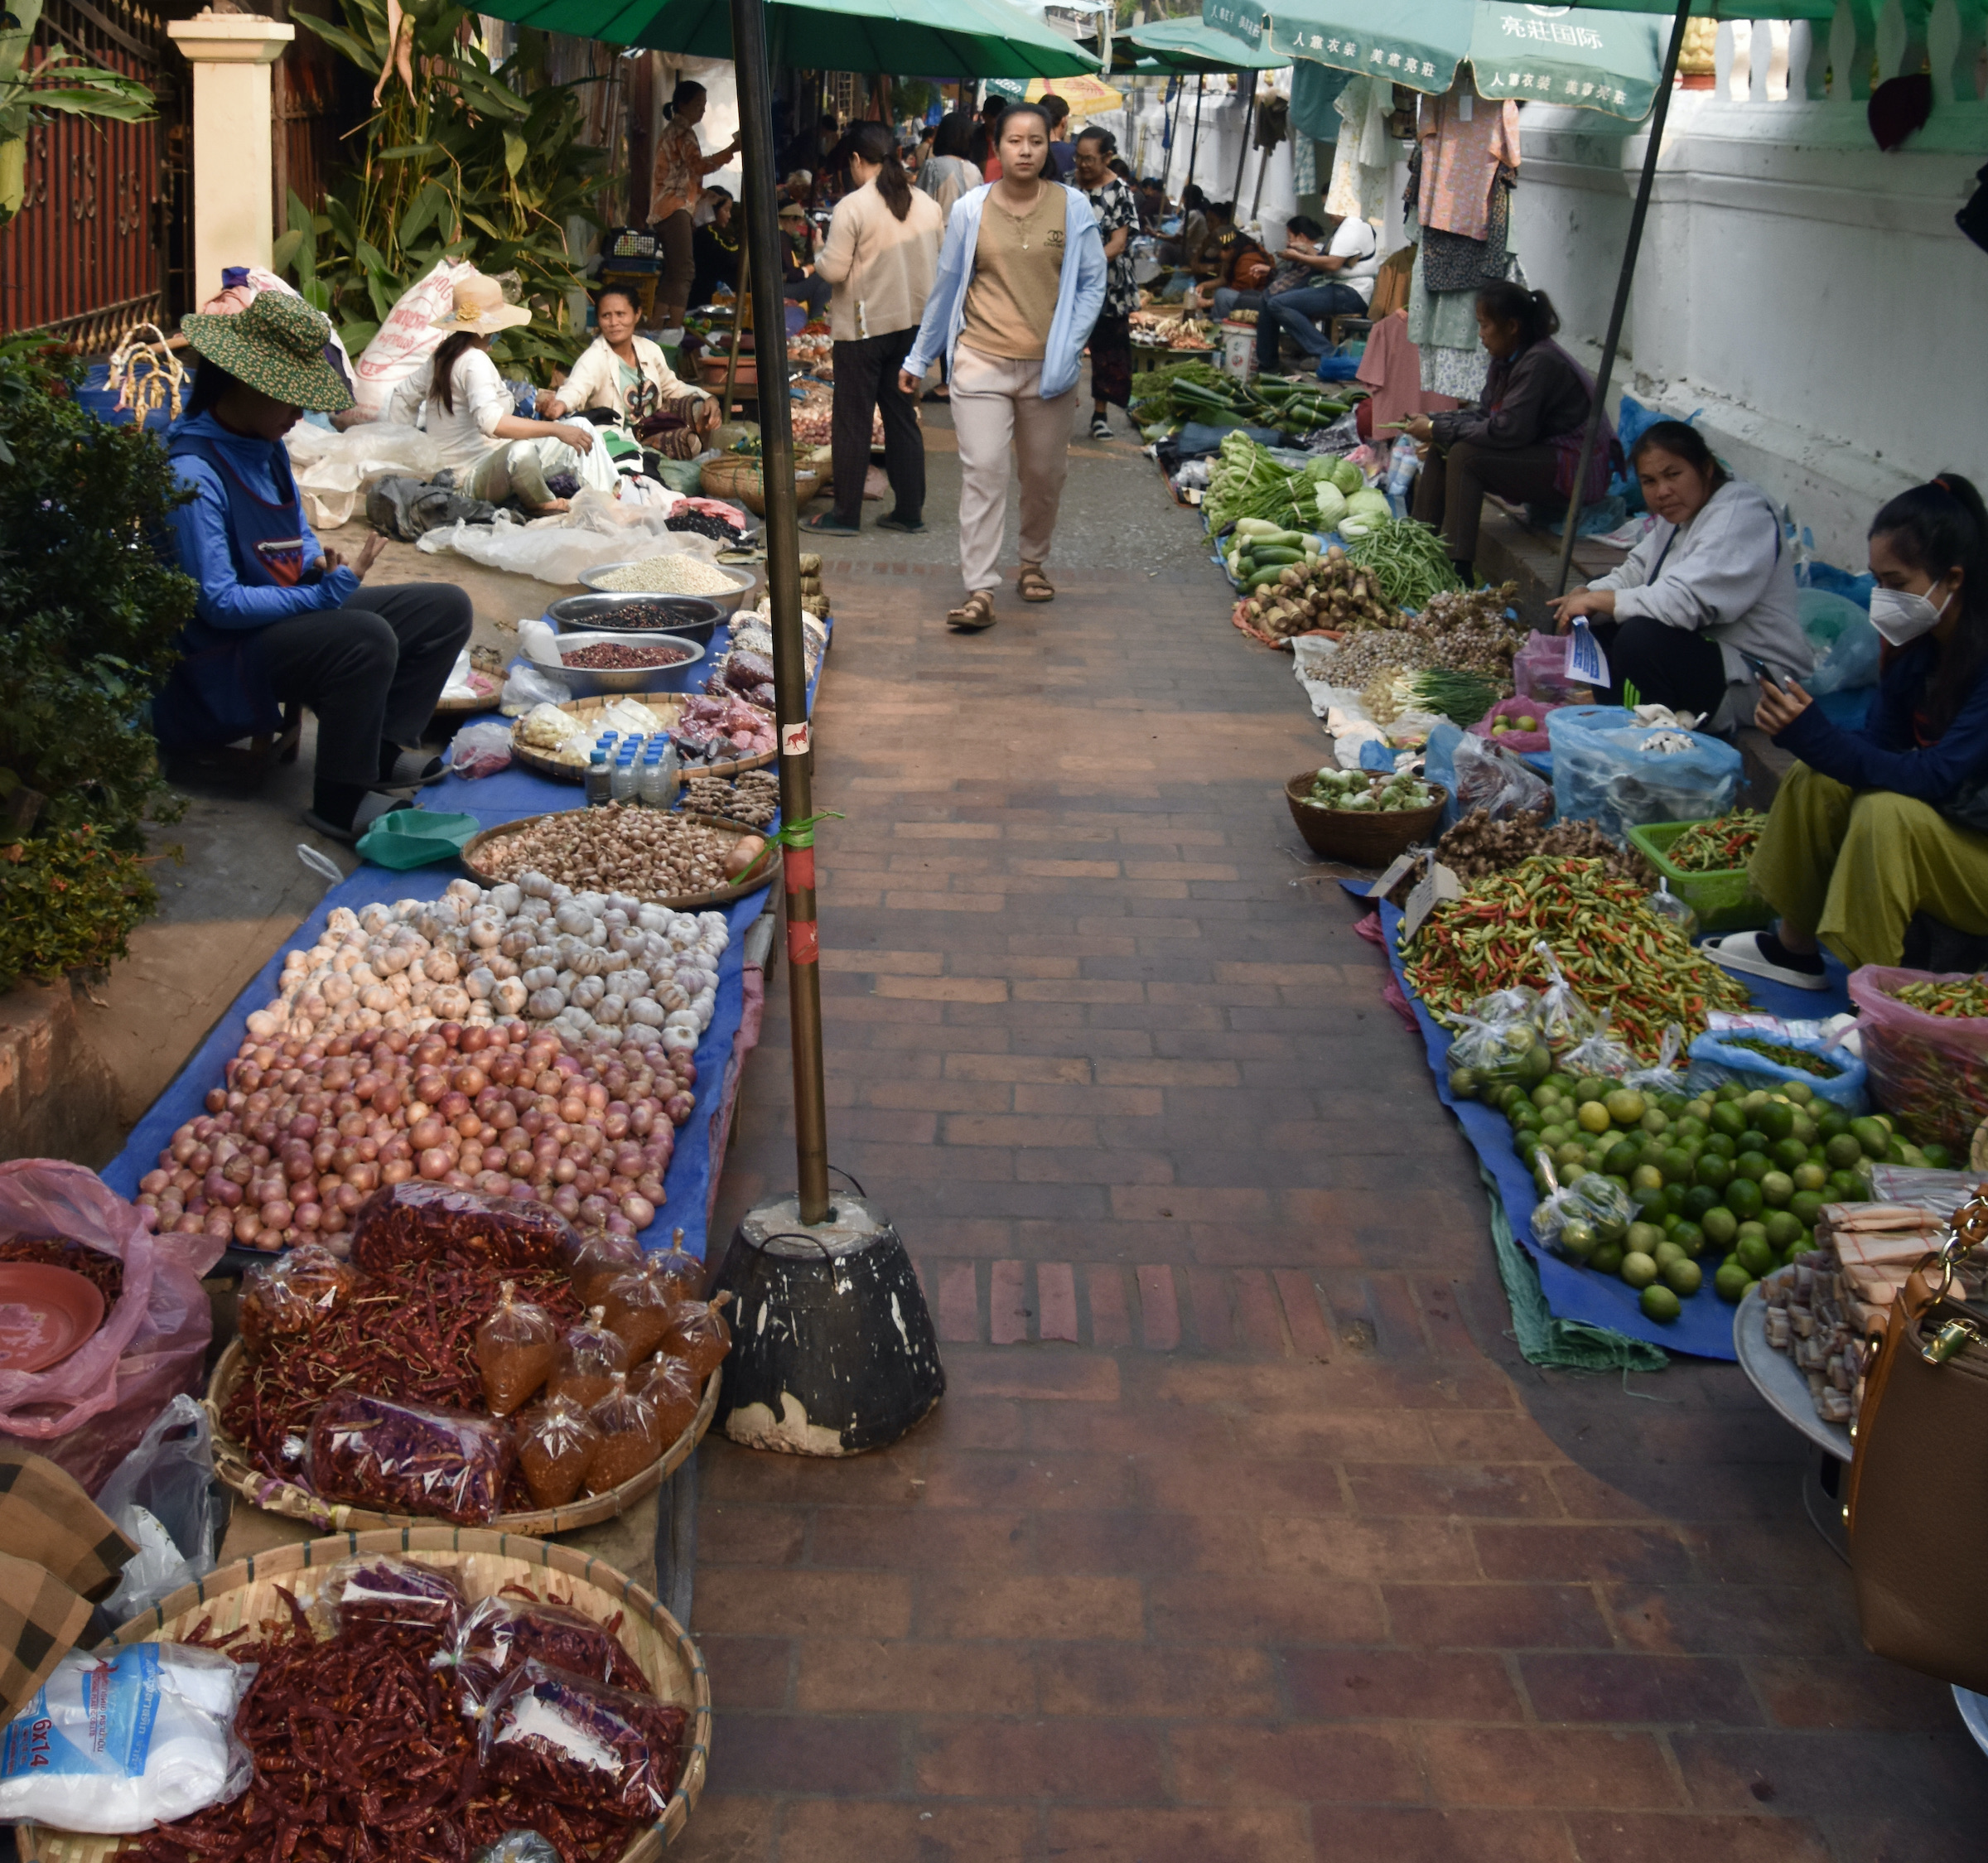 The Market in Luang Prabang, Laos